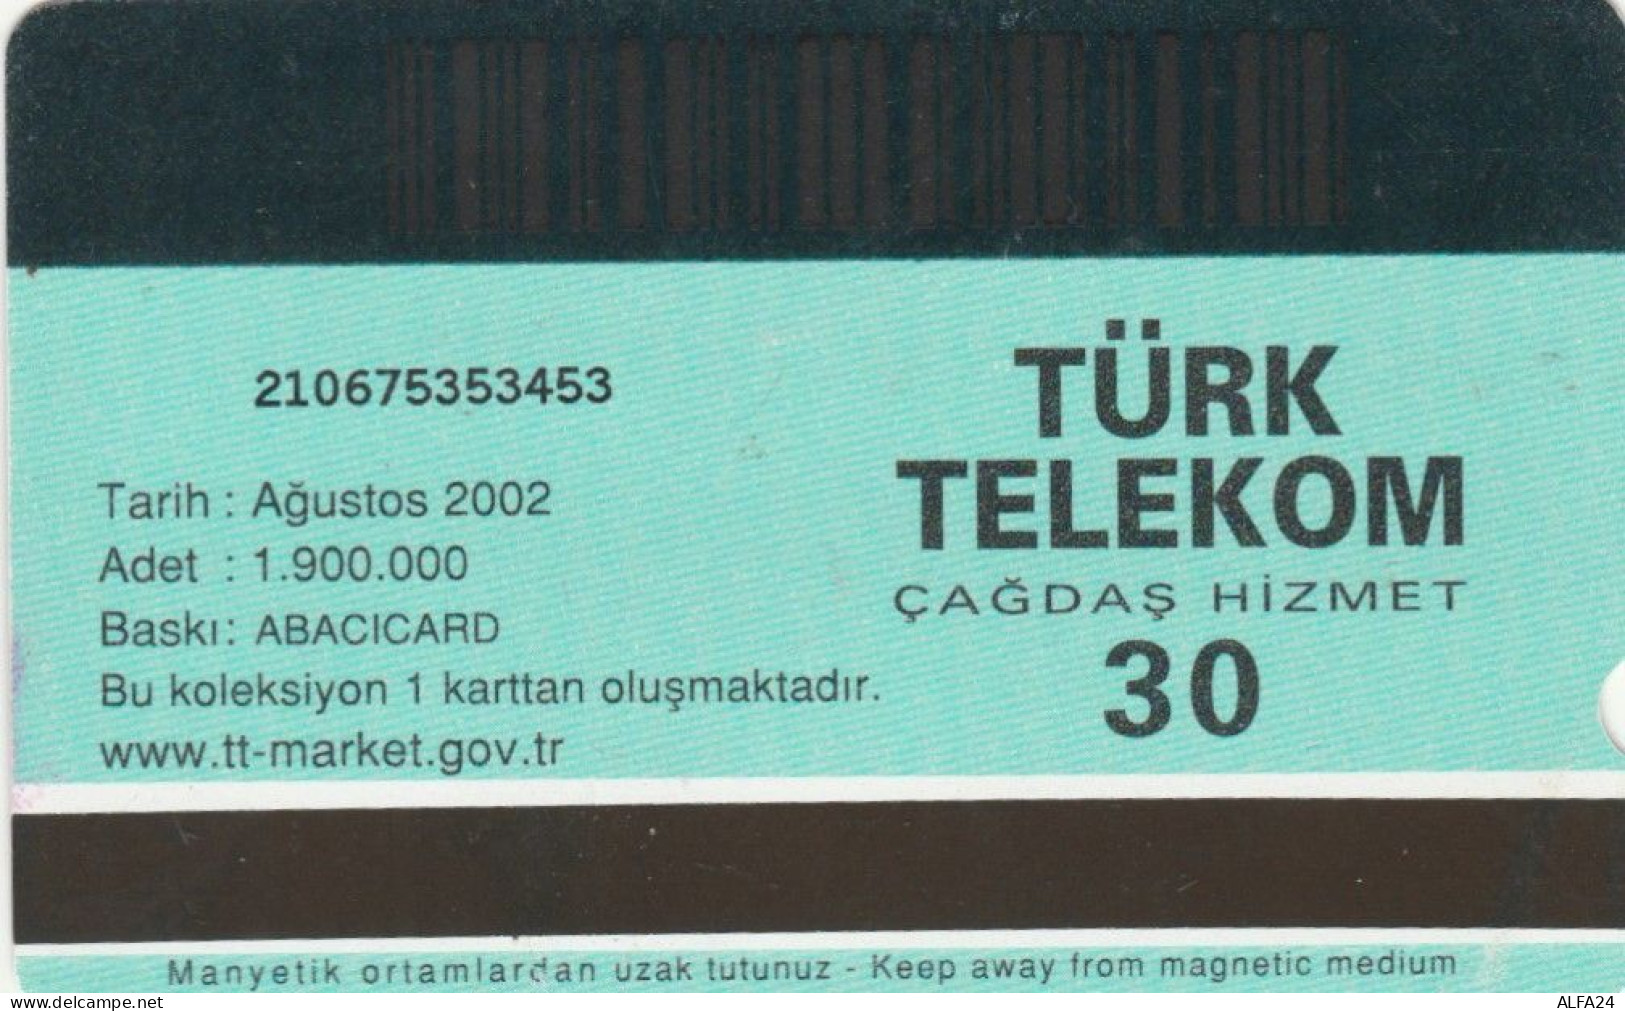 PHONE CARD TURCHIA EUROPA CARD SHOW (E47.8.2 - Turquie